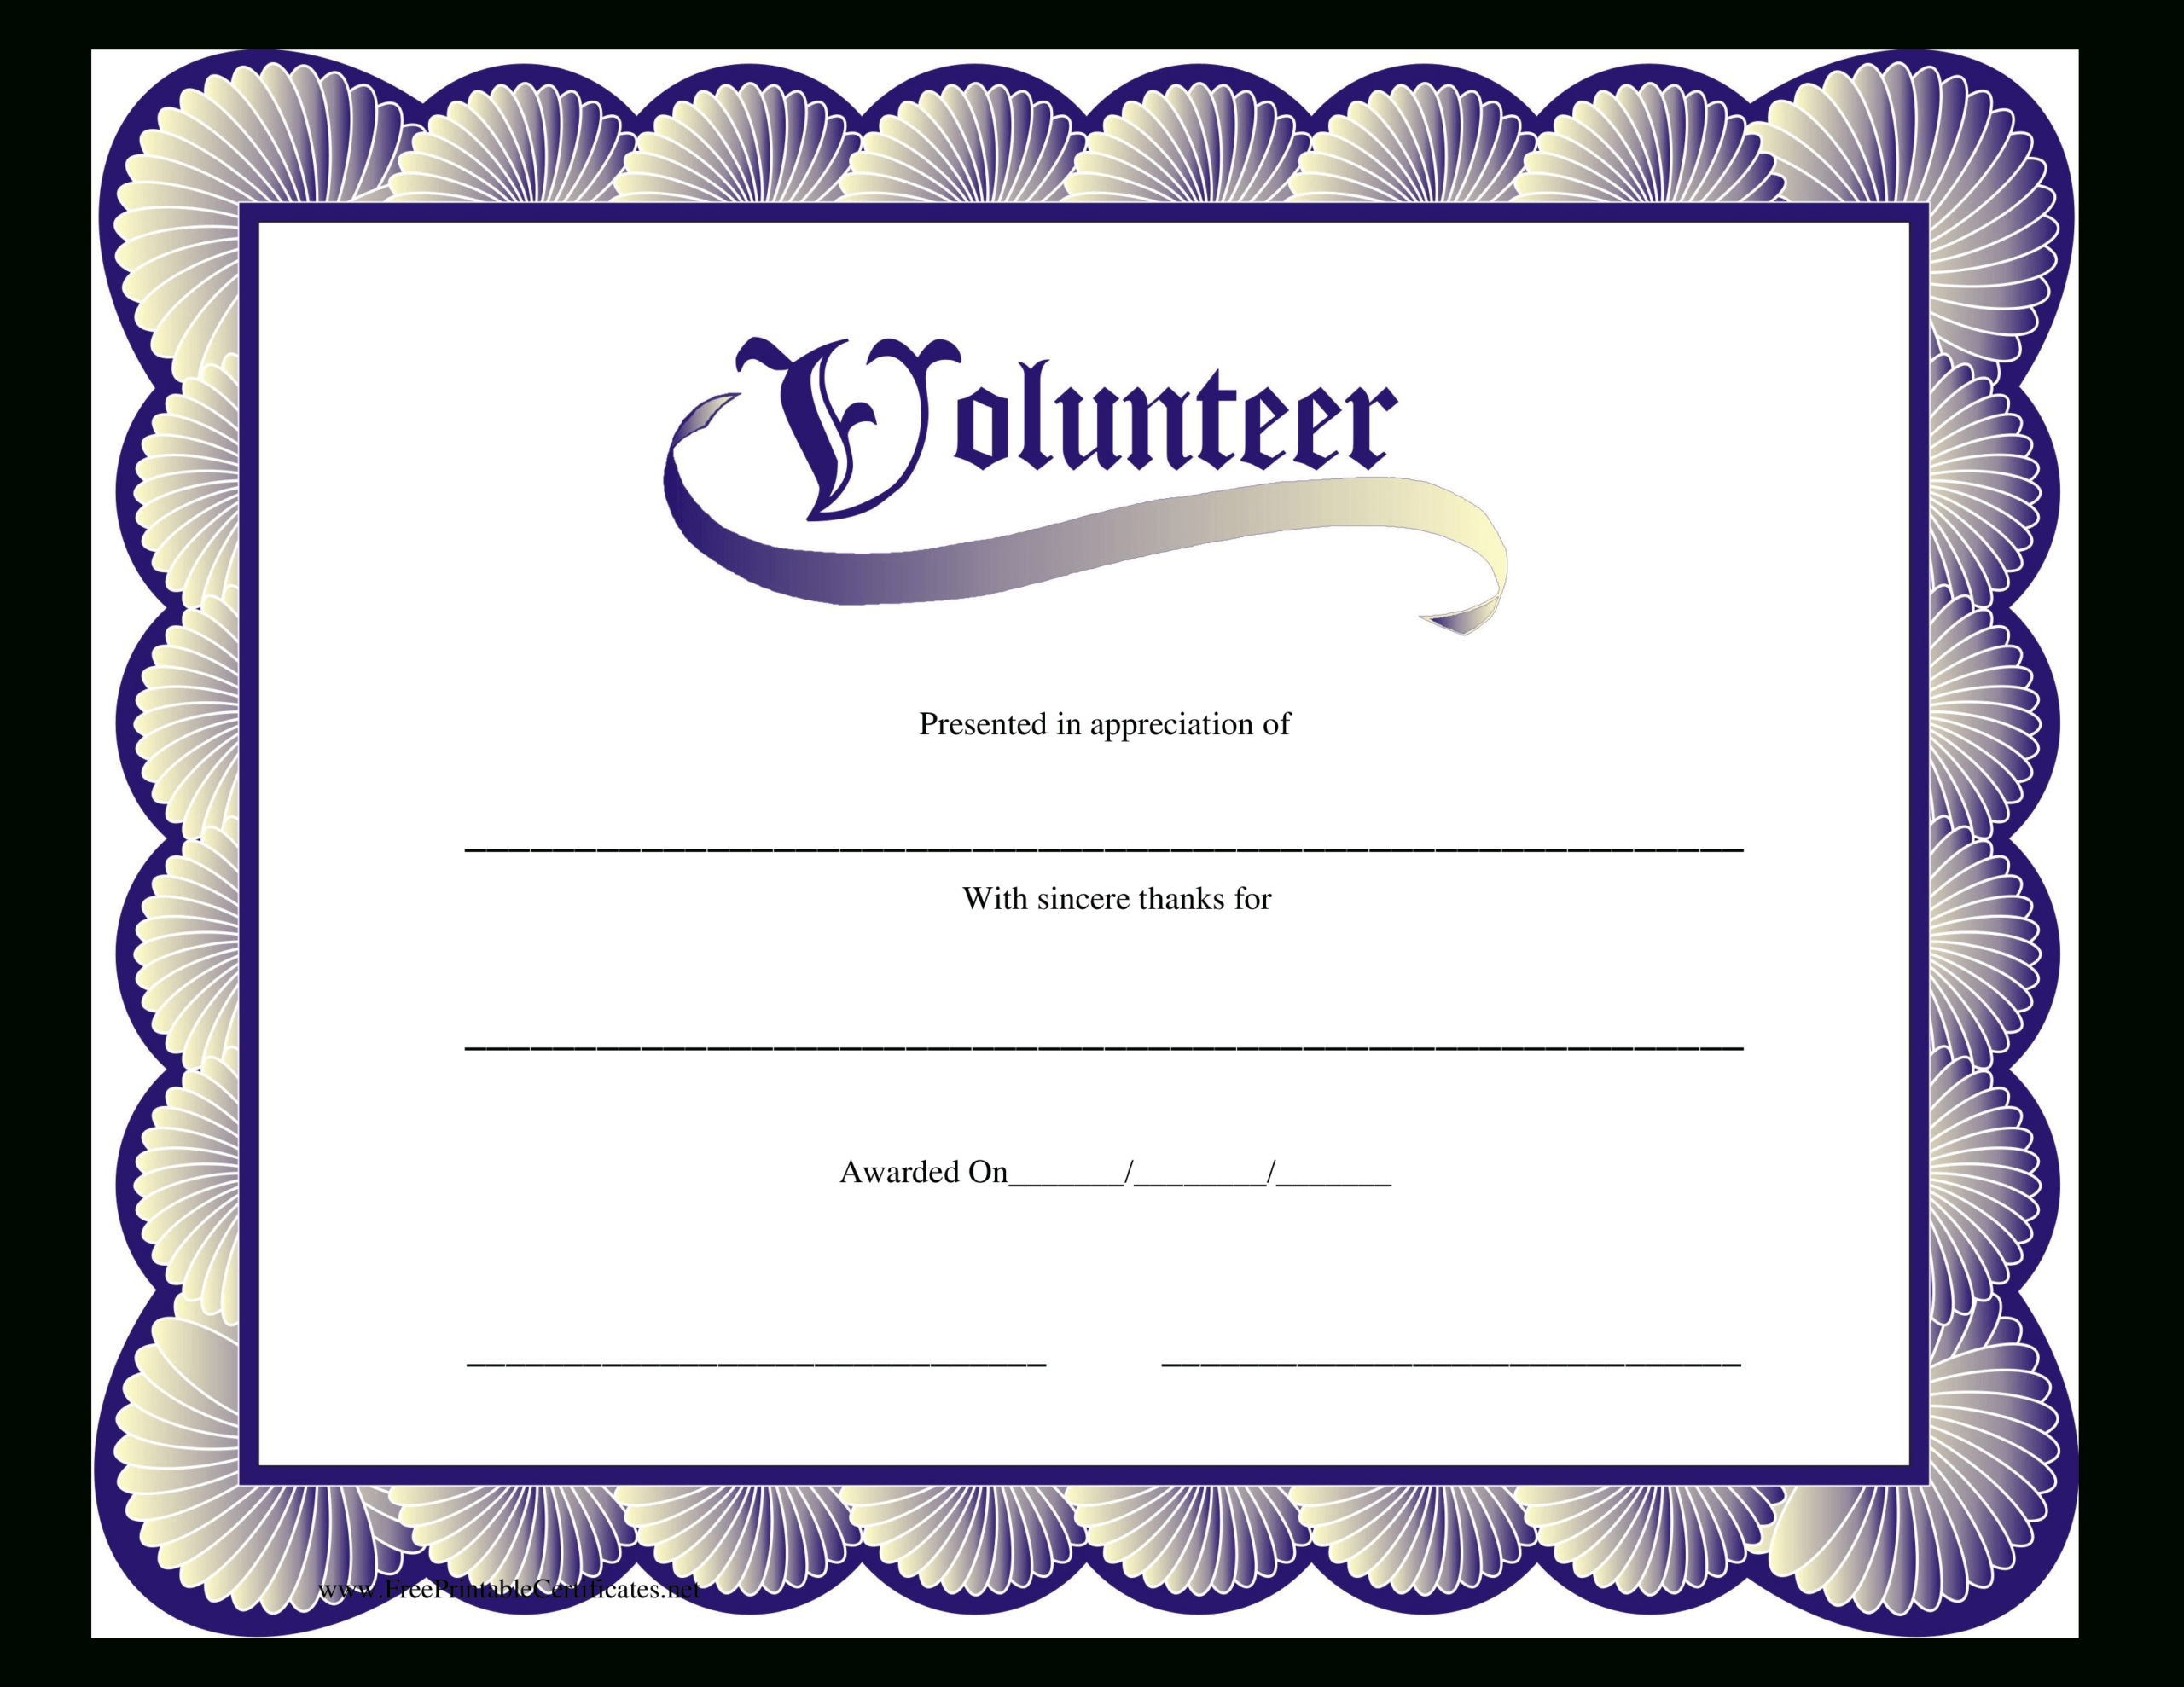 Volunteer Certificate | Templates At Allbusinesstemplates Regarding Volunteer Of The Year Certificate Template